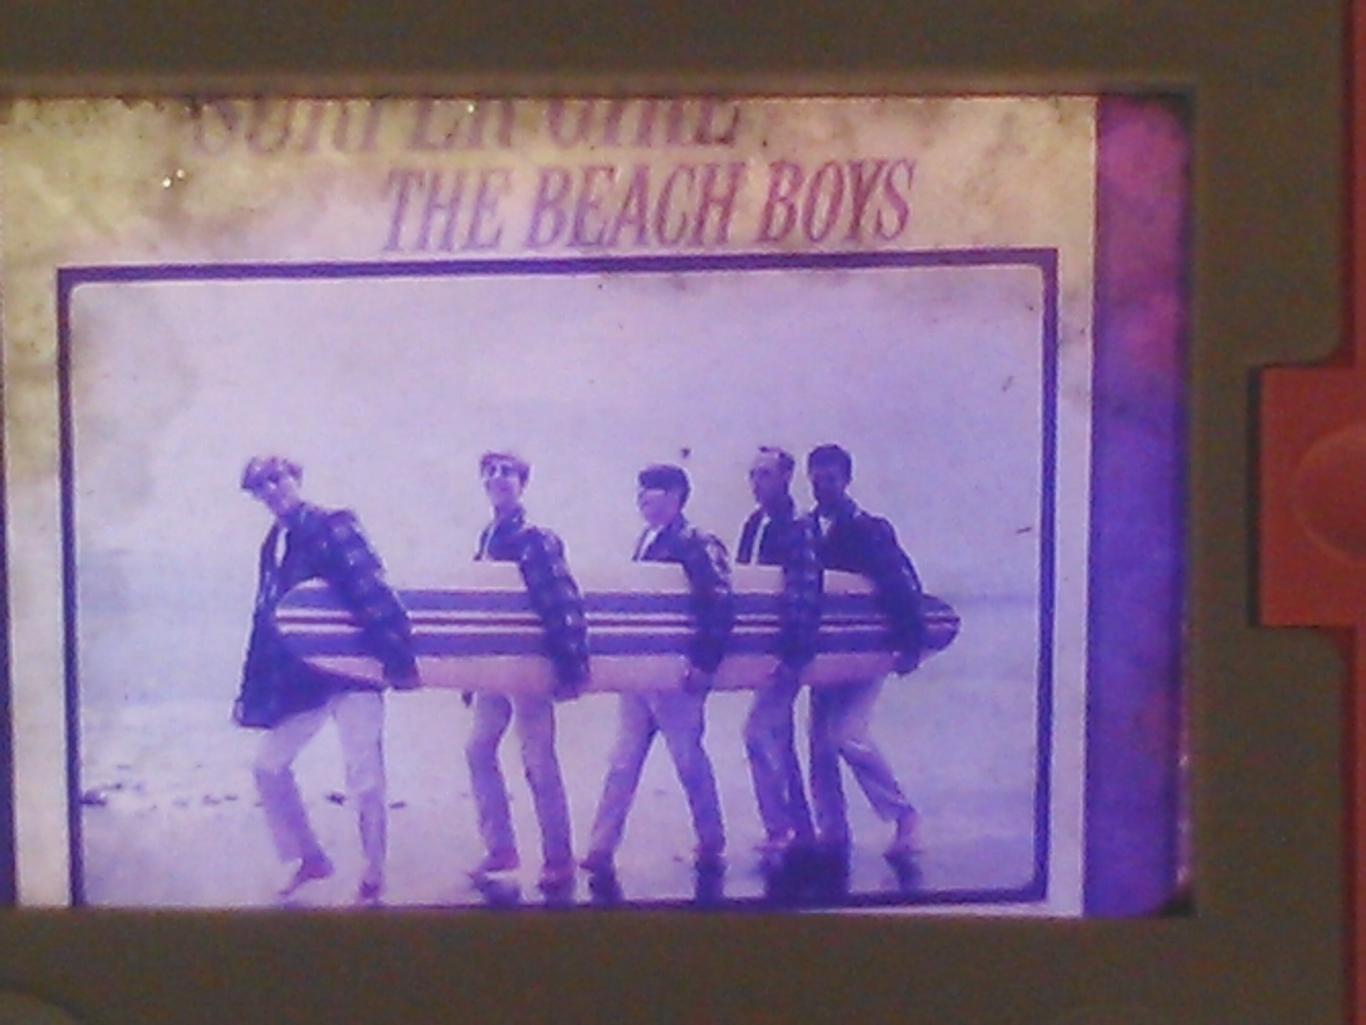 BEACH BOYS слайд (диапозитив) в пластиковой рамке